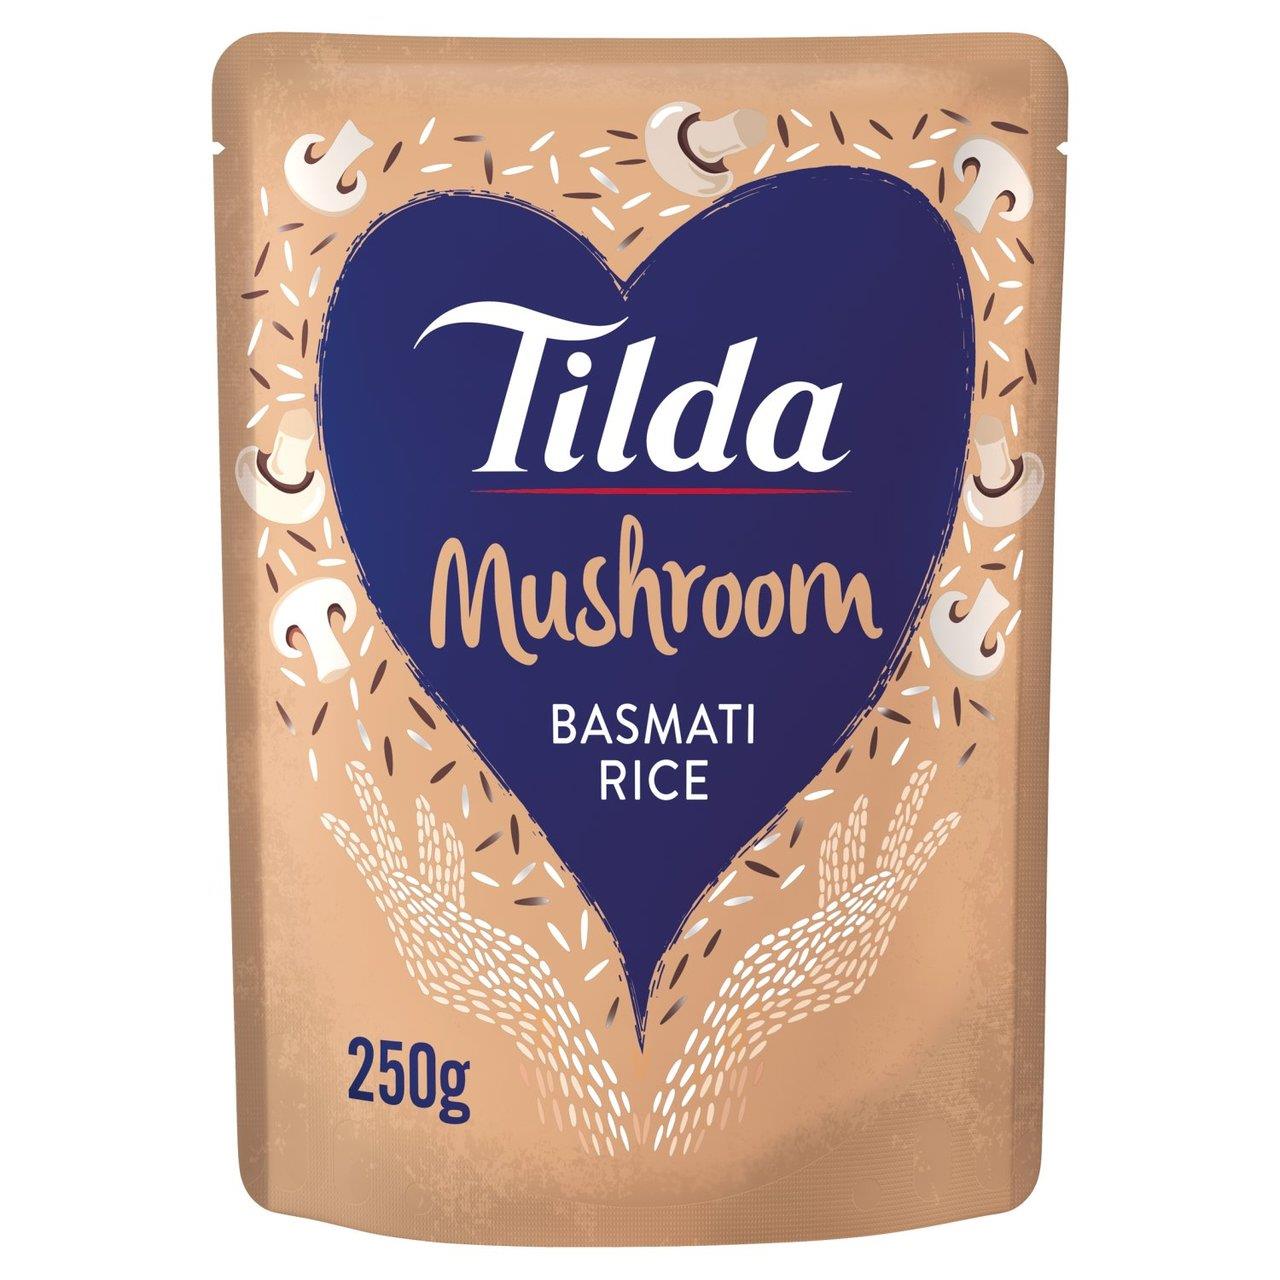 Tilda Mushroom Basmati Rice Pouch 250g